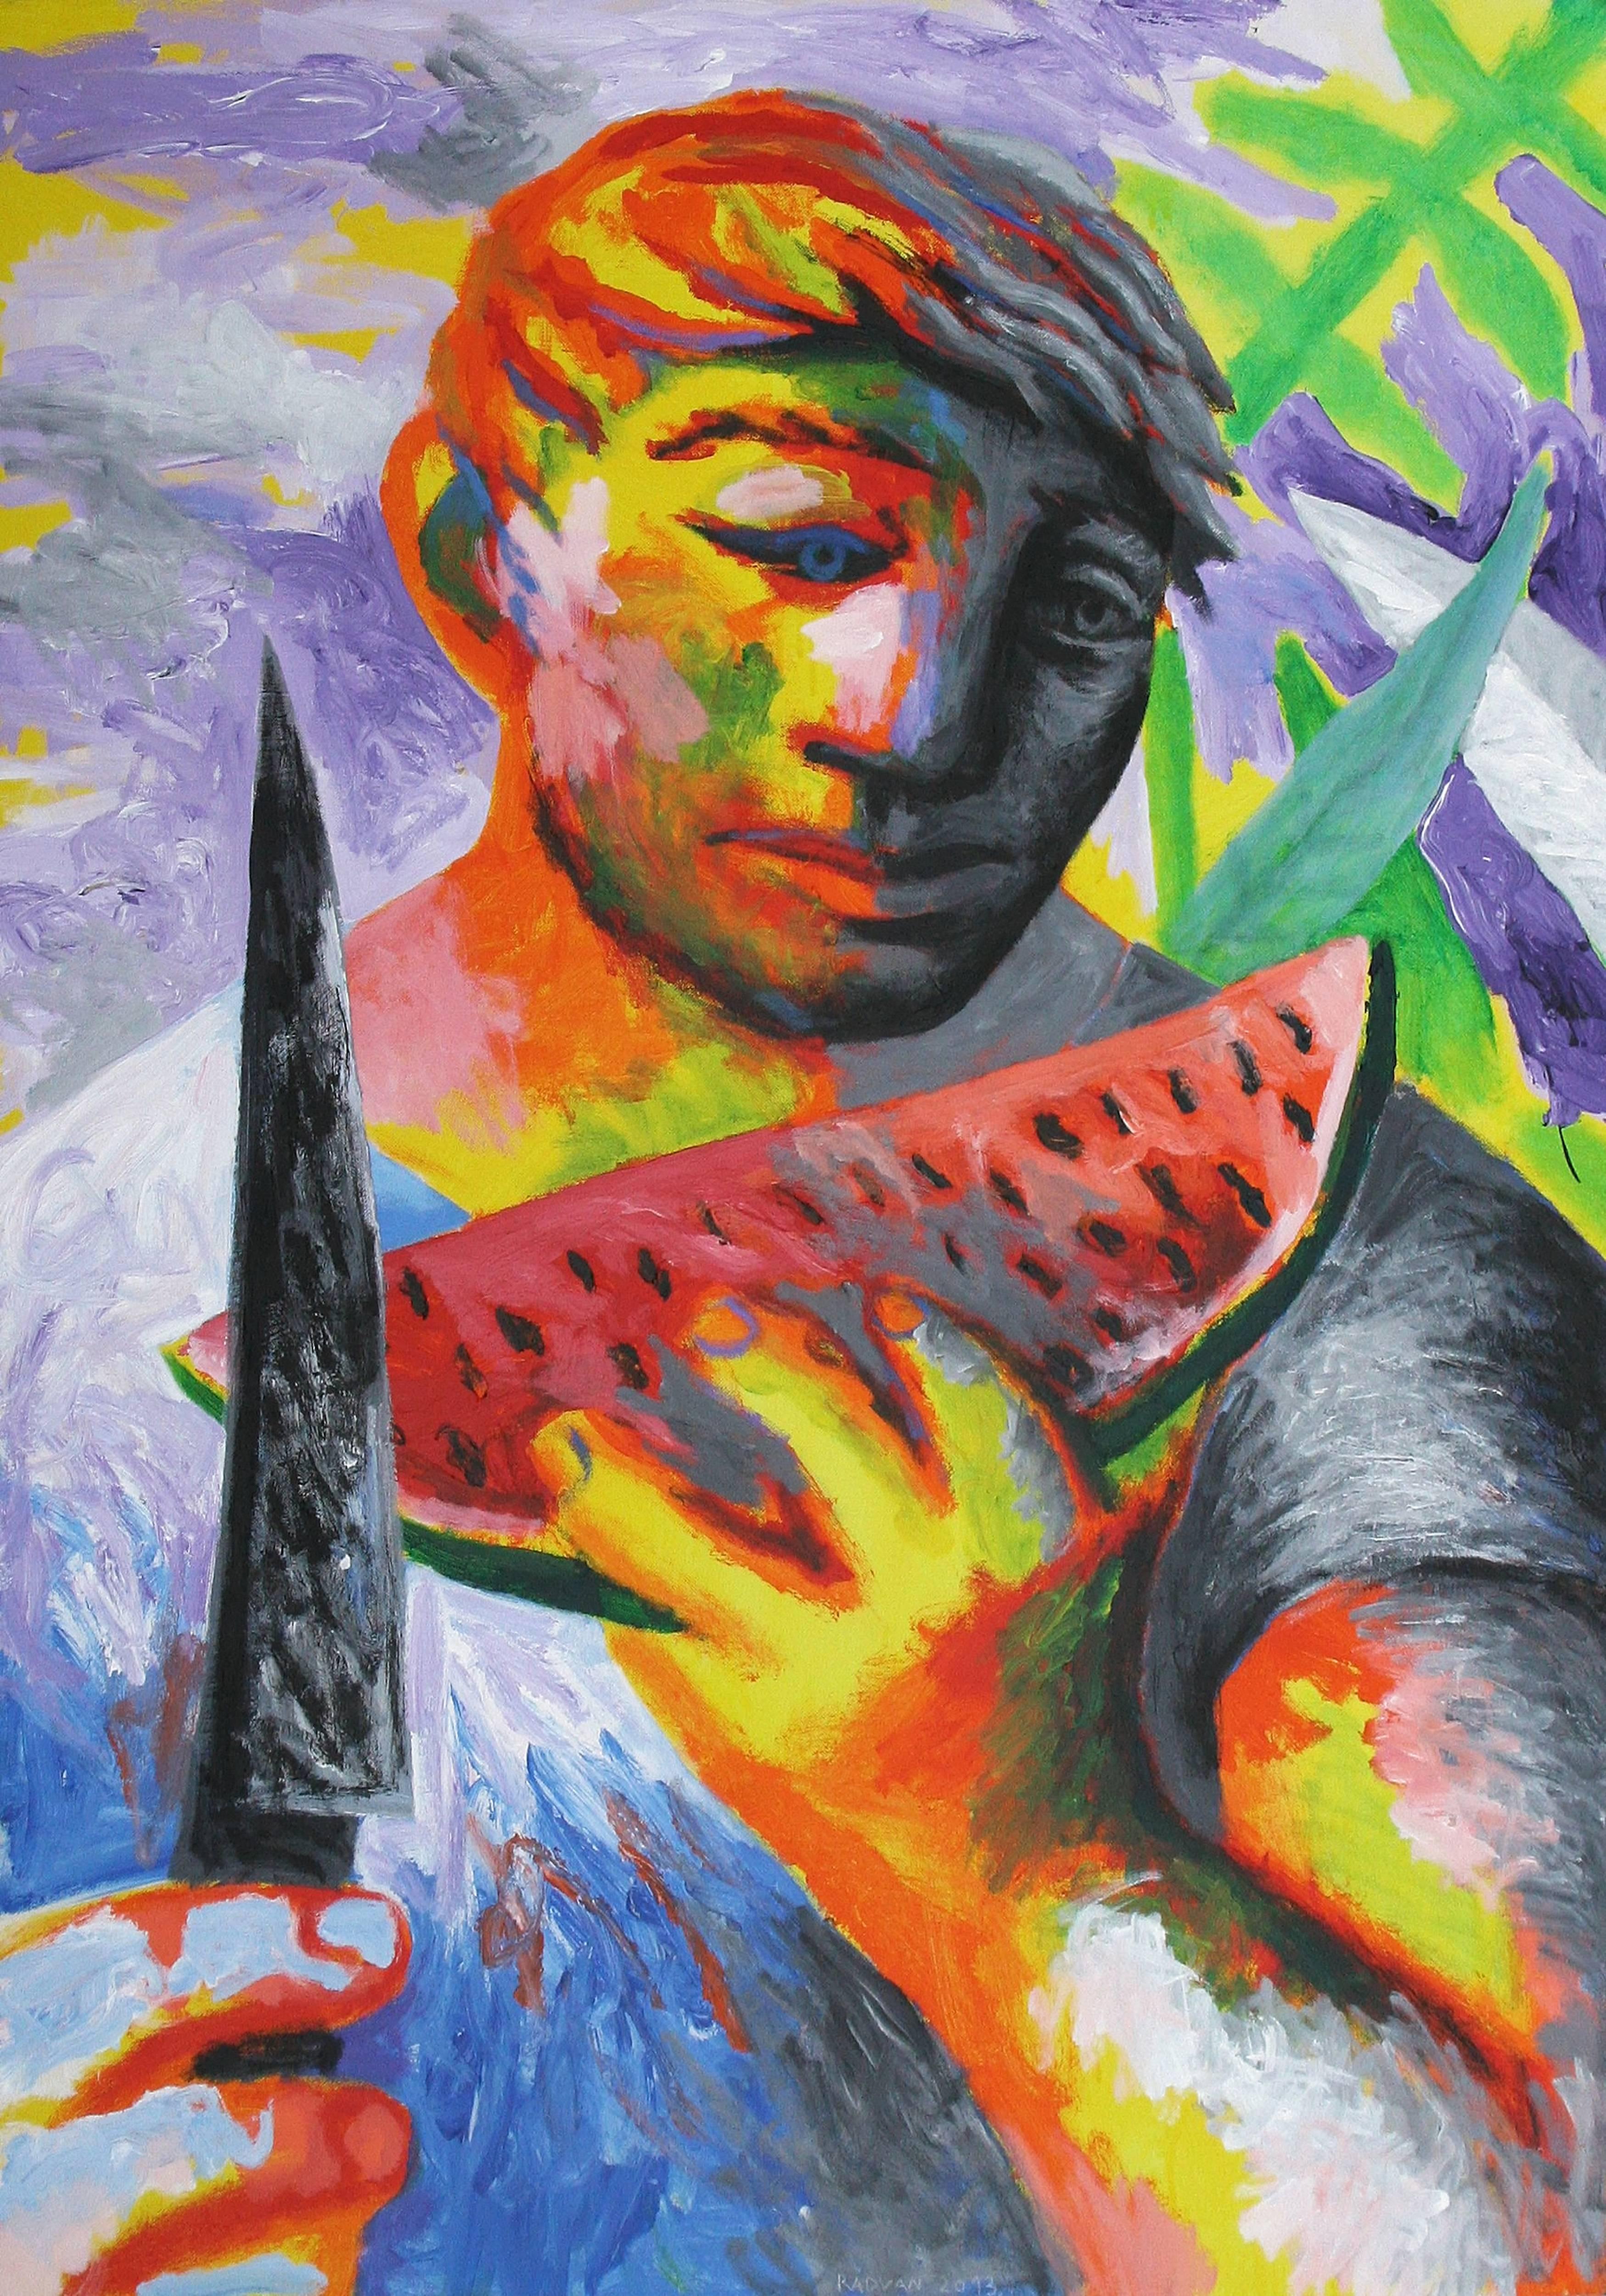 Watermelon - Figurative Painting, 21st Century, Colorful, Human, Fruit, Orange